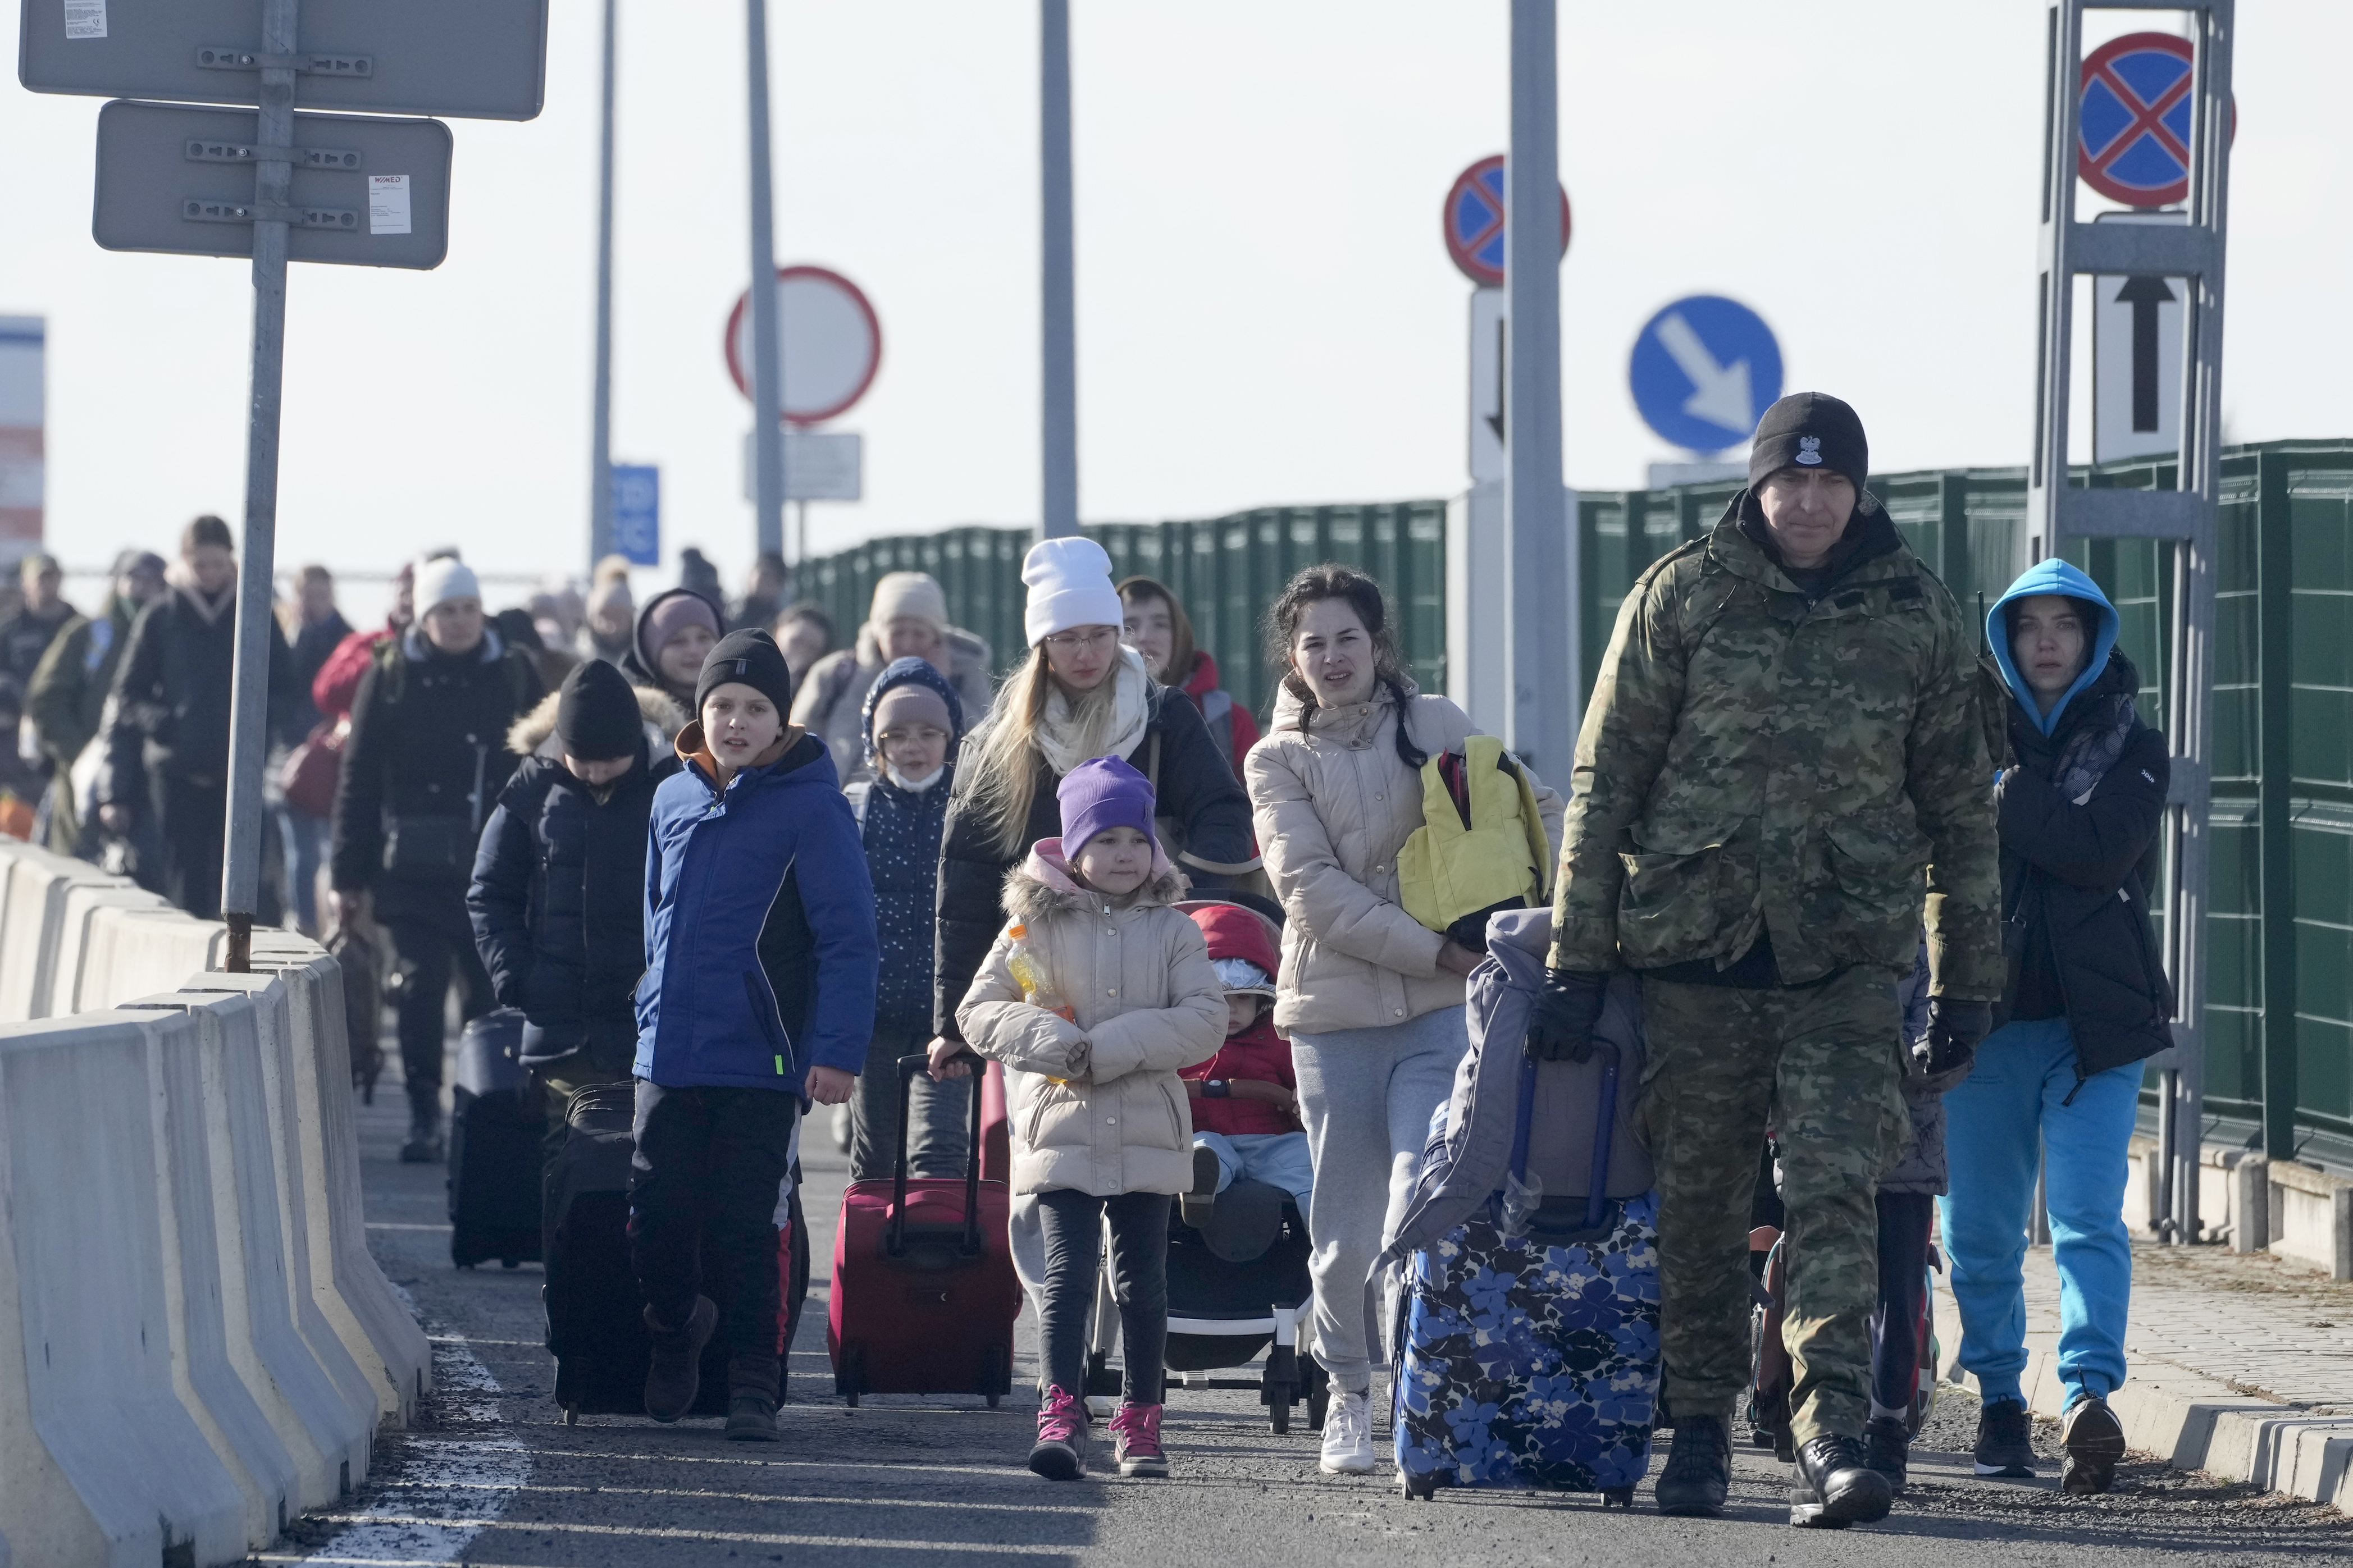 Perché l’Europa è improvvisamente così interessata ad aiutare i rifugiati?